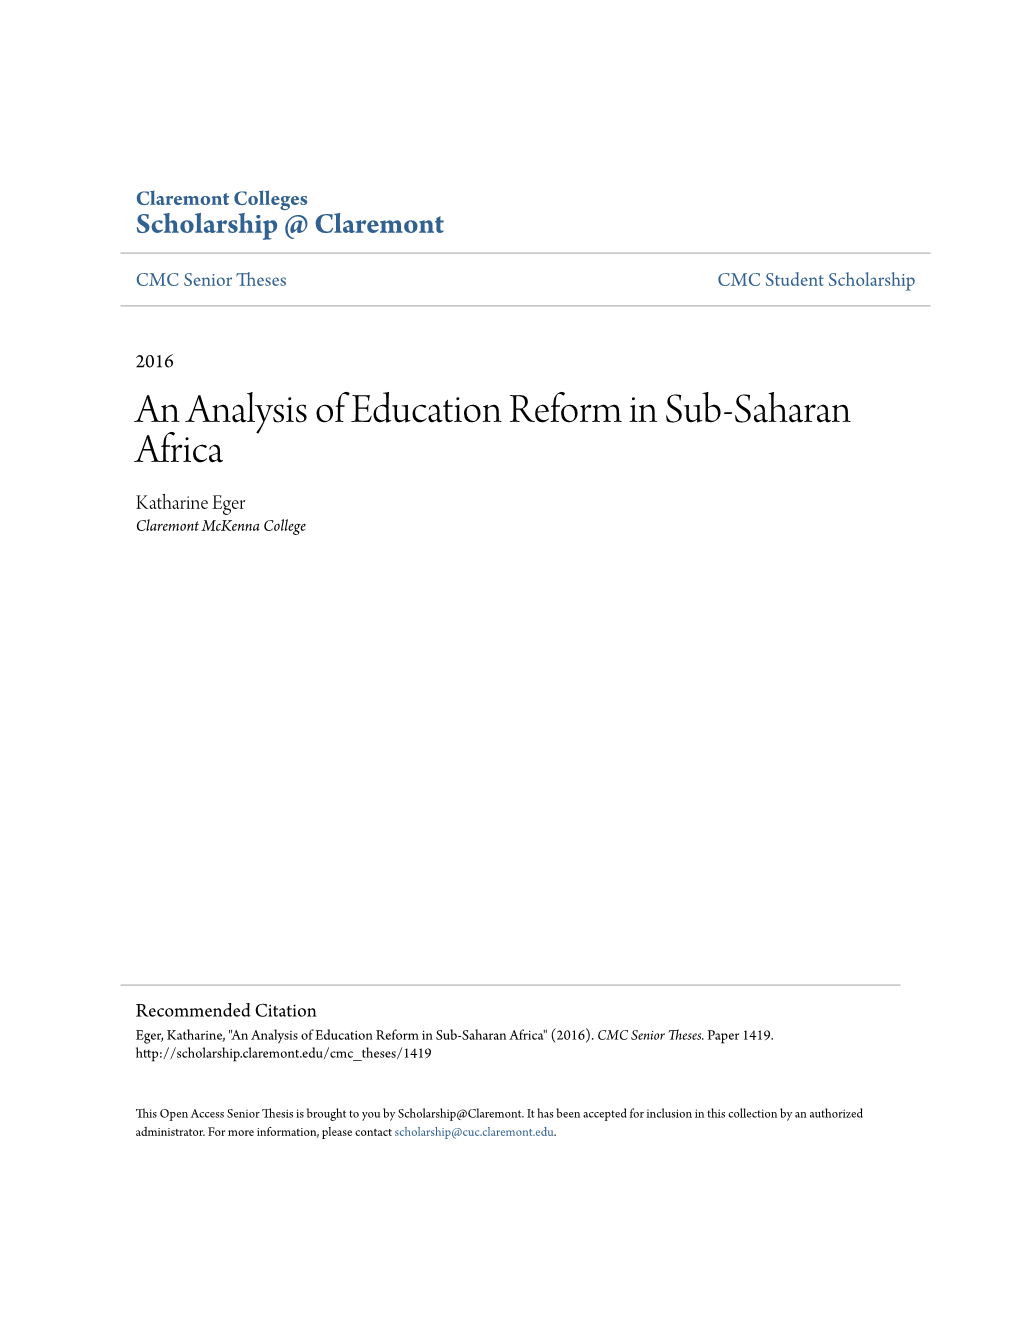 An Analysis of Education Reform in Sub-Saharan Africa Katharine Eger Claremont Mckenna College